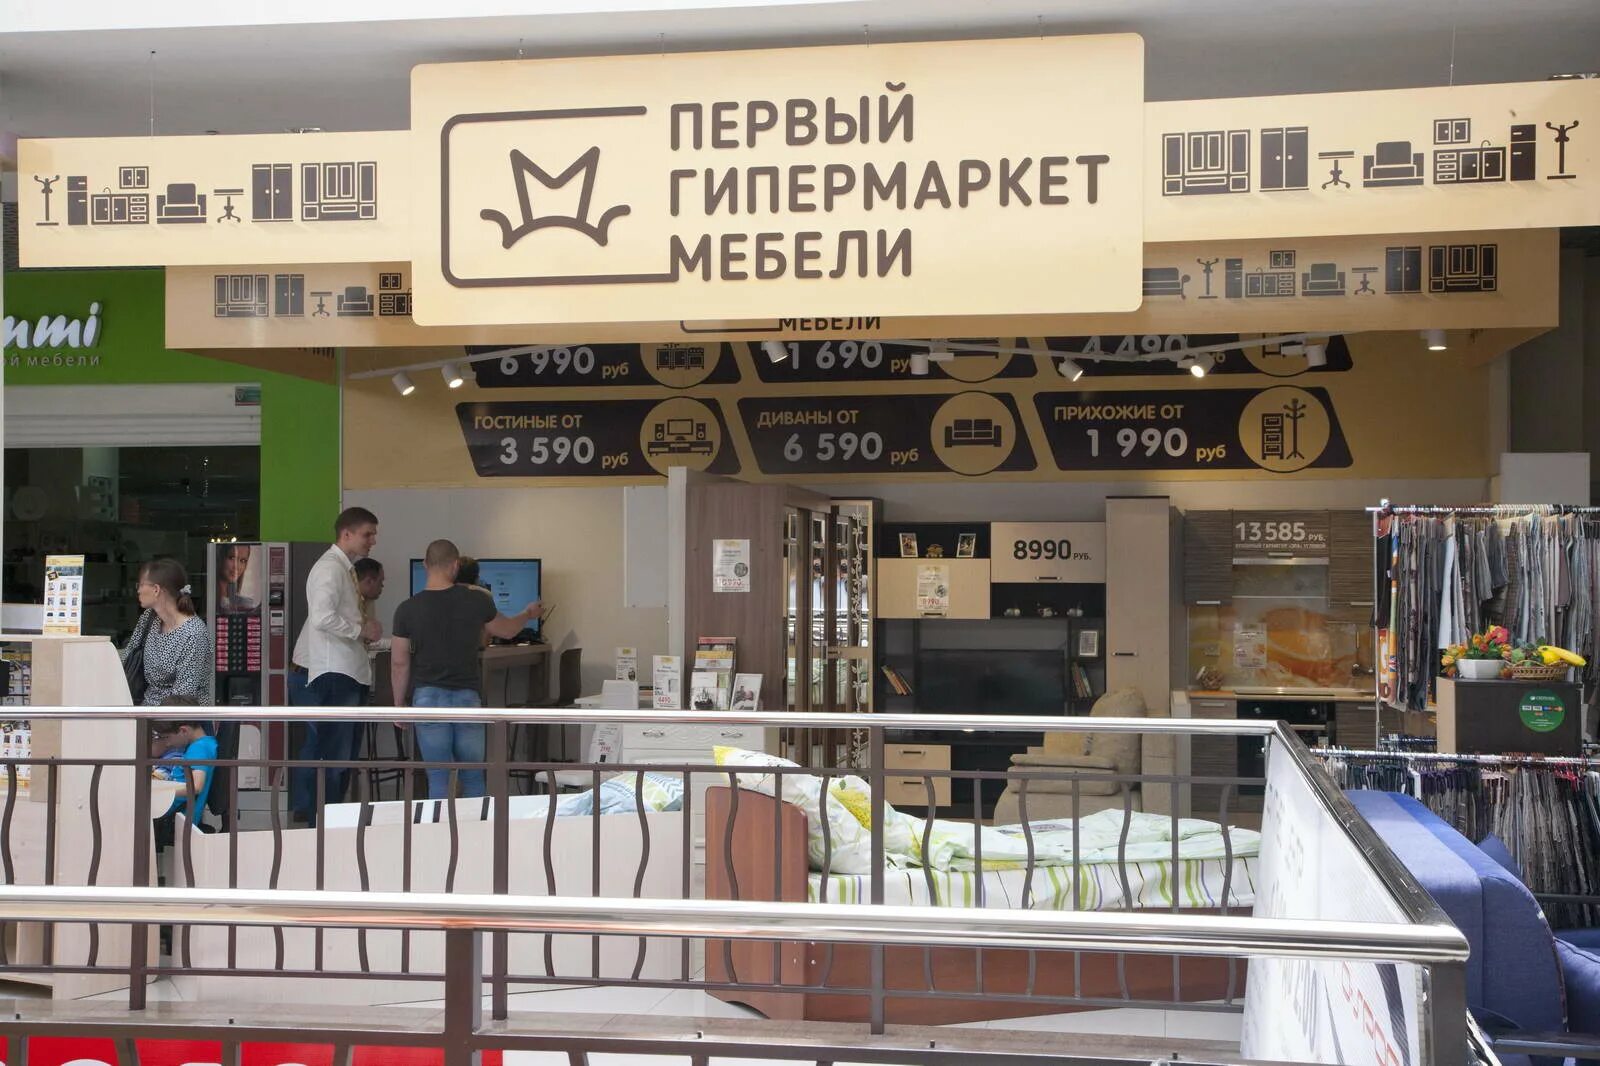 Первый гипермаркет мебели магазины. Первый гипермаркет мебели. Первый гипермаркет магазин. Первый гипермаркет мебели Екатеринбург. Гипермаркет 1 мебельный.